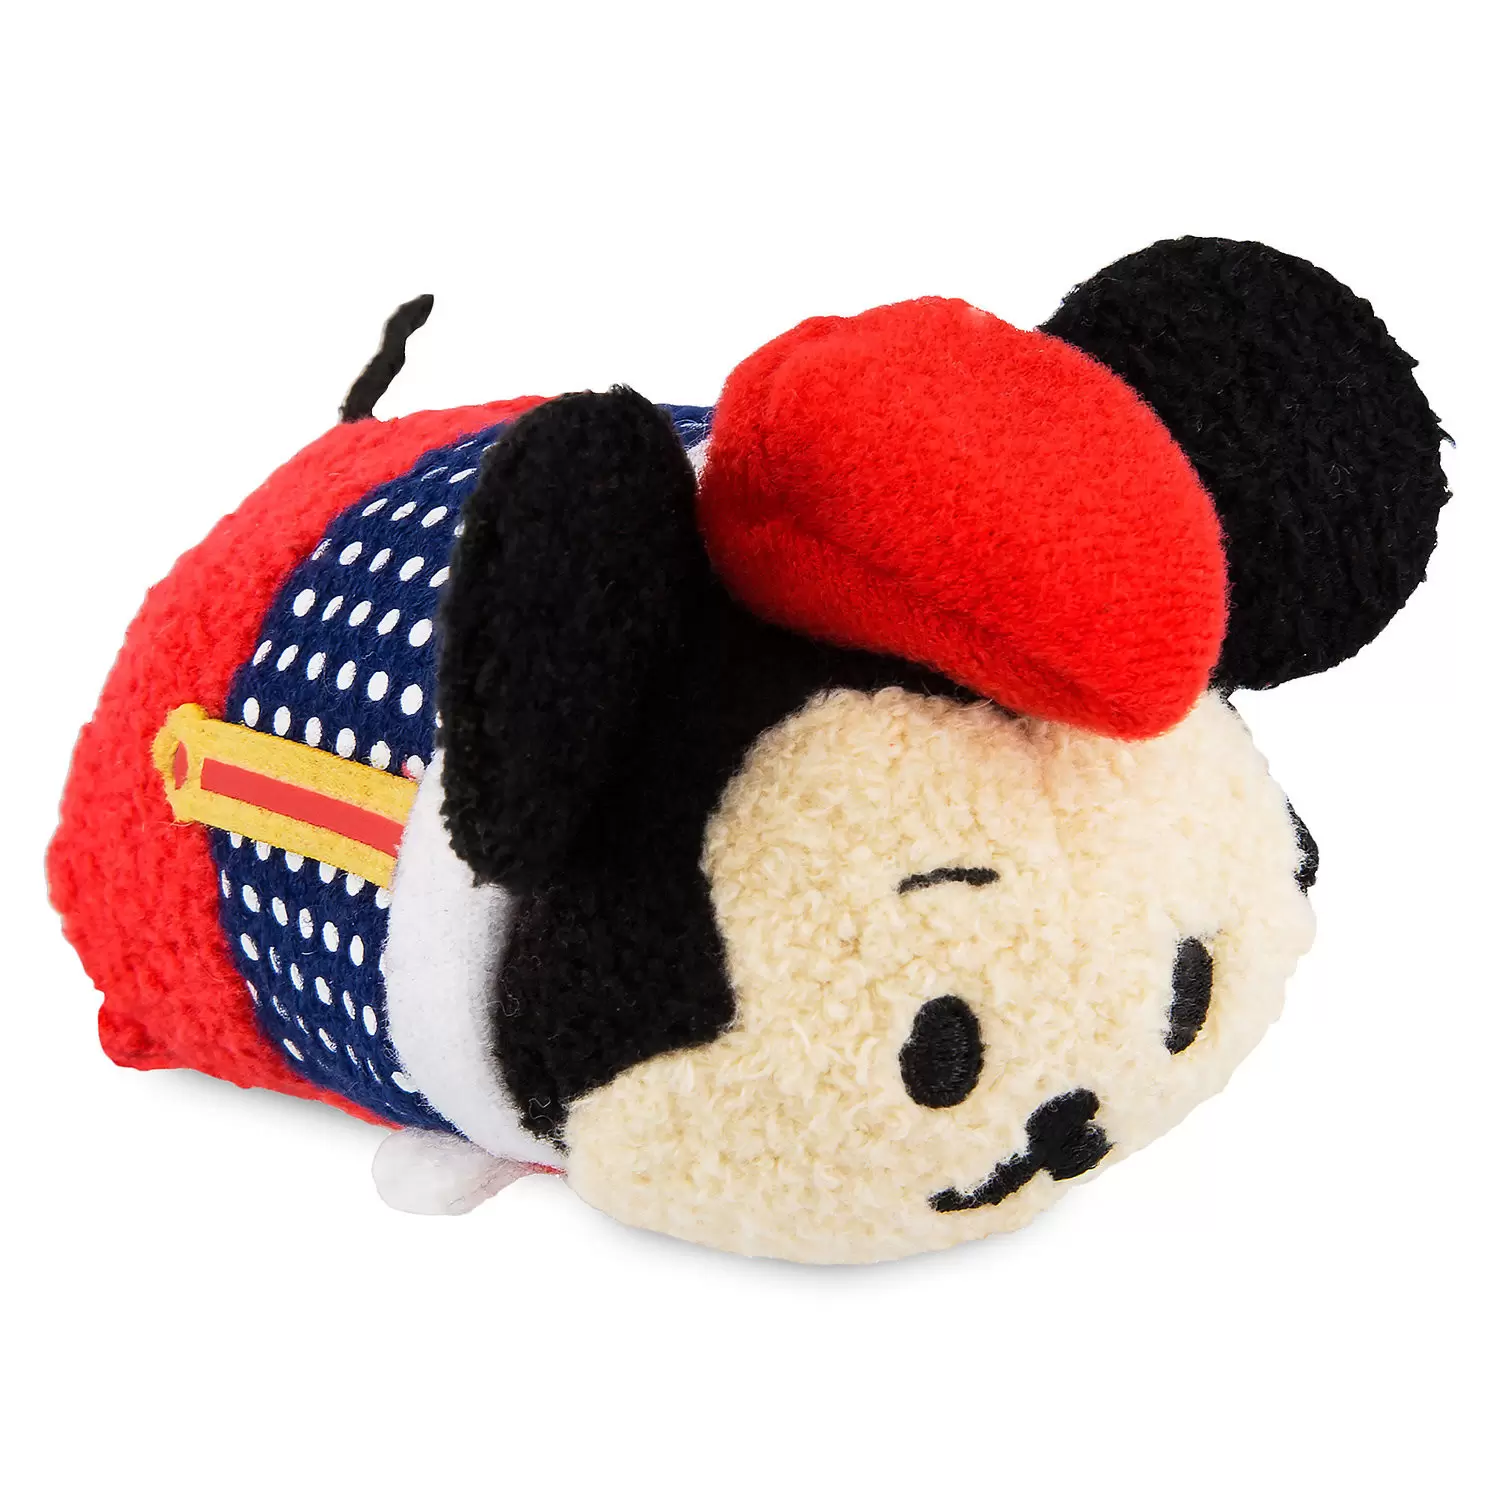 Mini Tsum Tsum Plush - Mickey Mouse Retro Chic